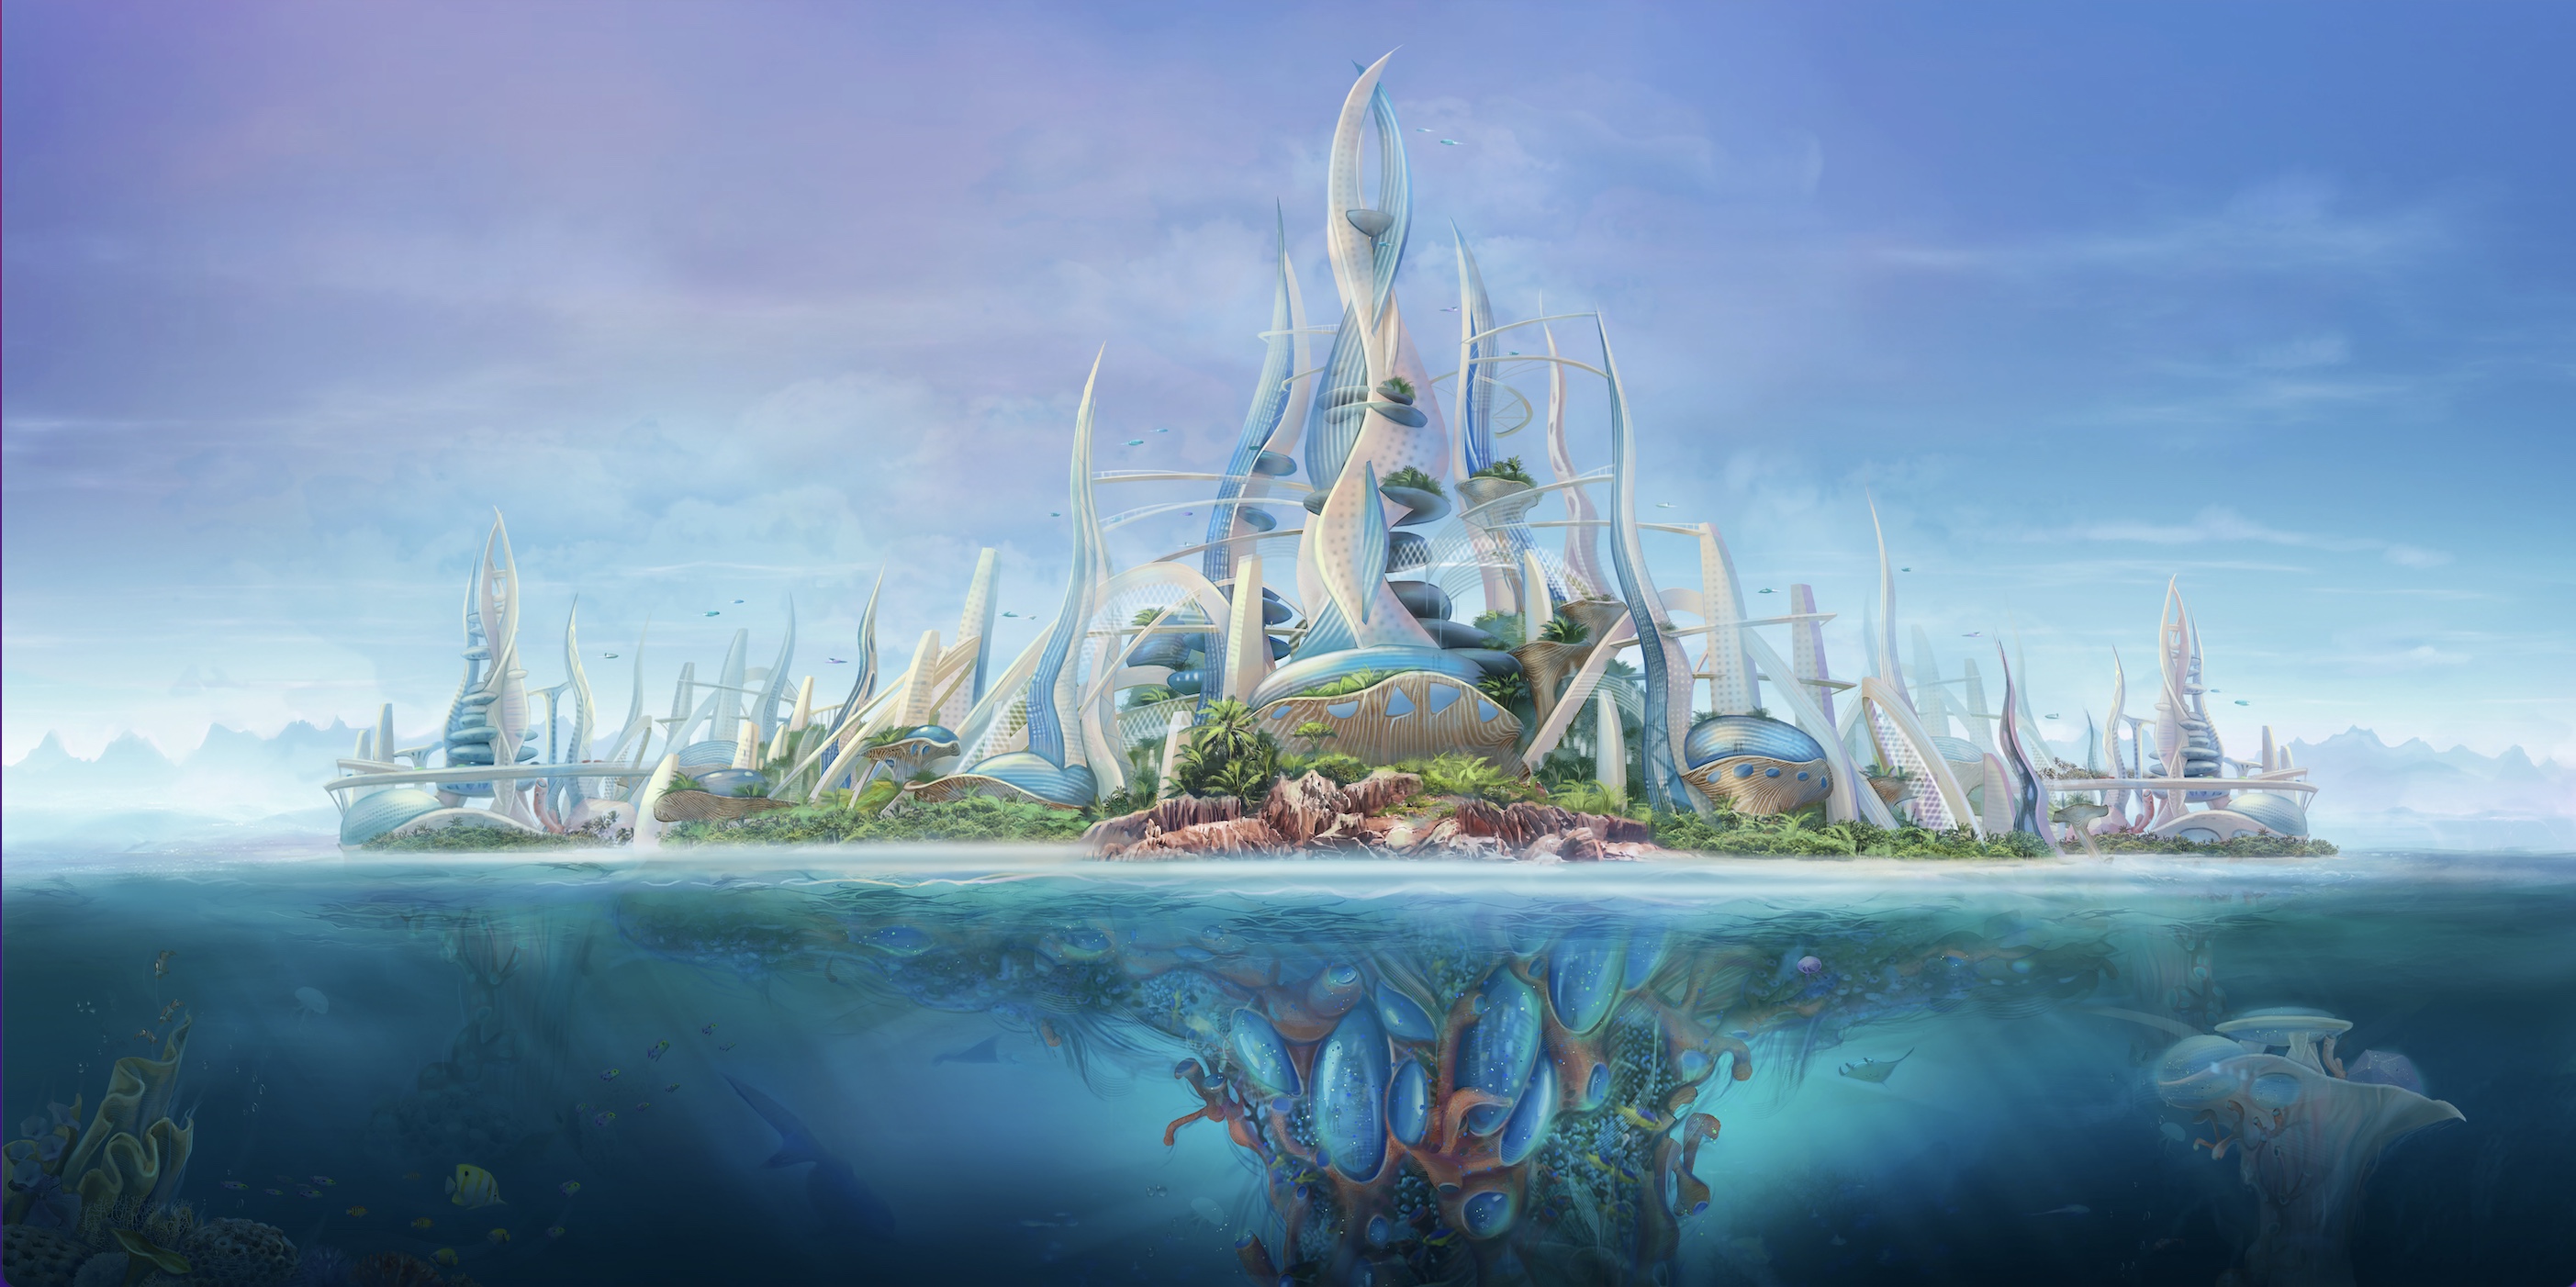 Coral island - Earth 2050